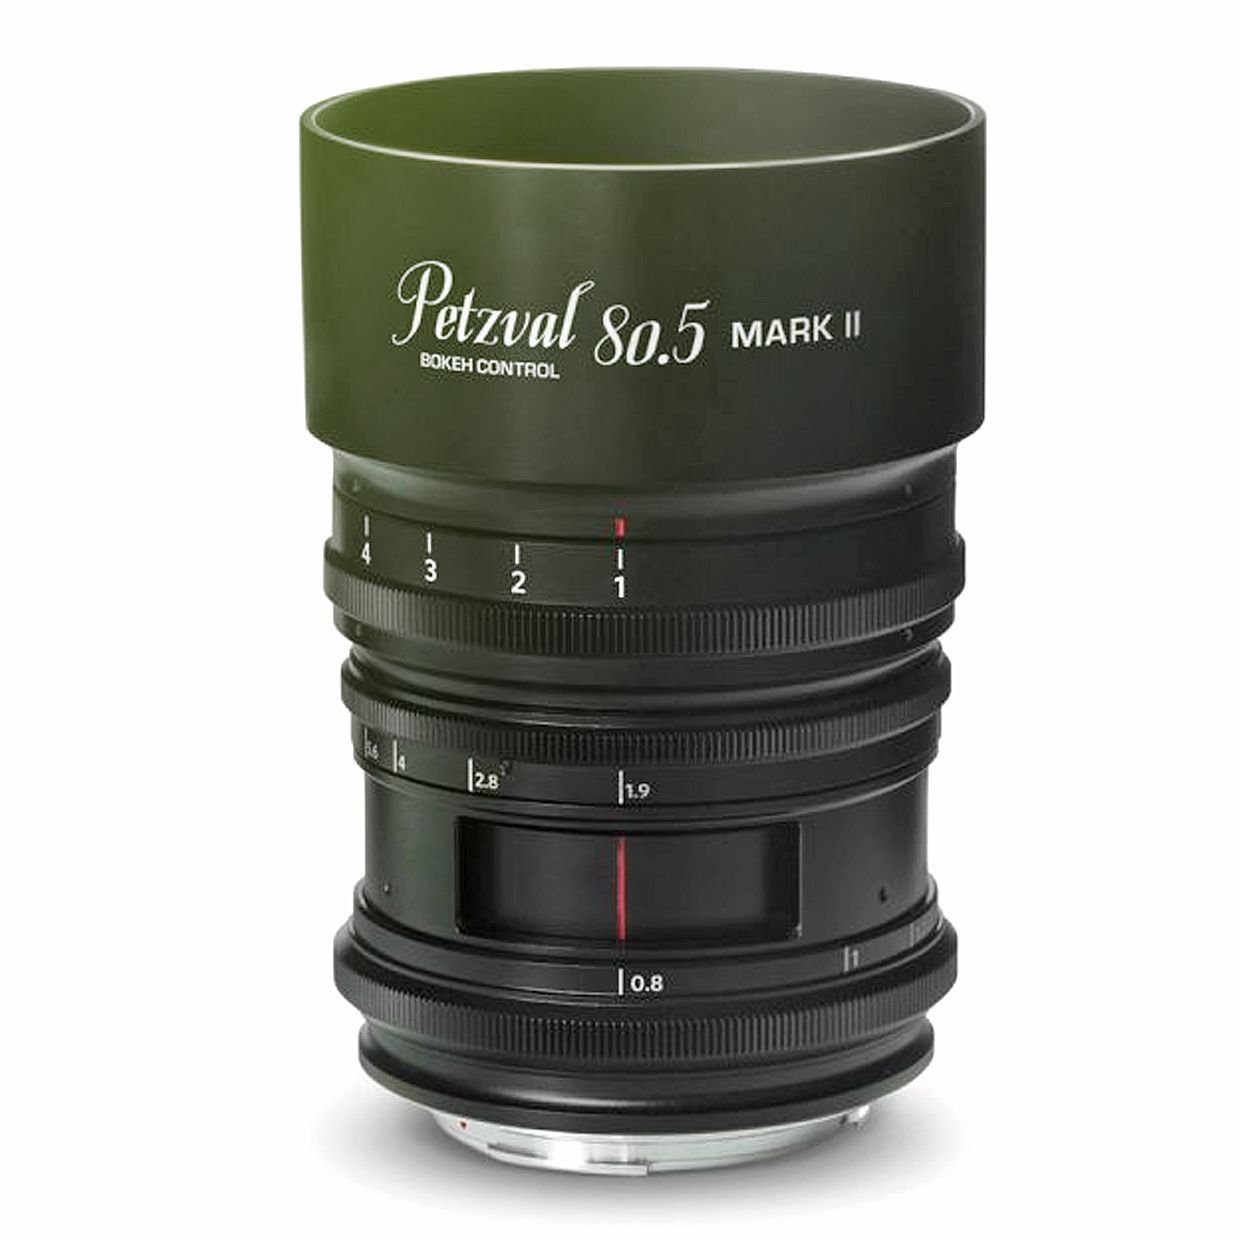 New Petzval 80.5mm f/1.9 MKII Bokeh Control Art Lens (Nikon FX Fmount)